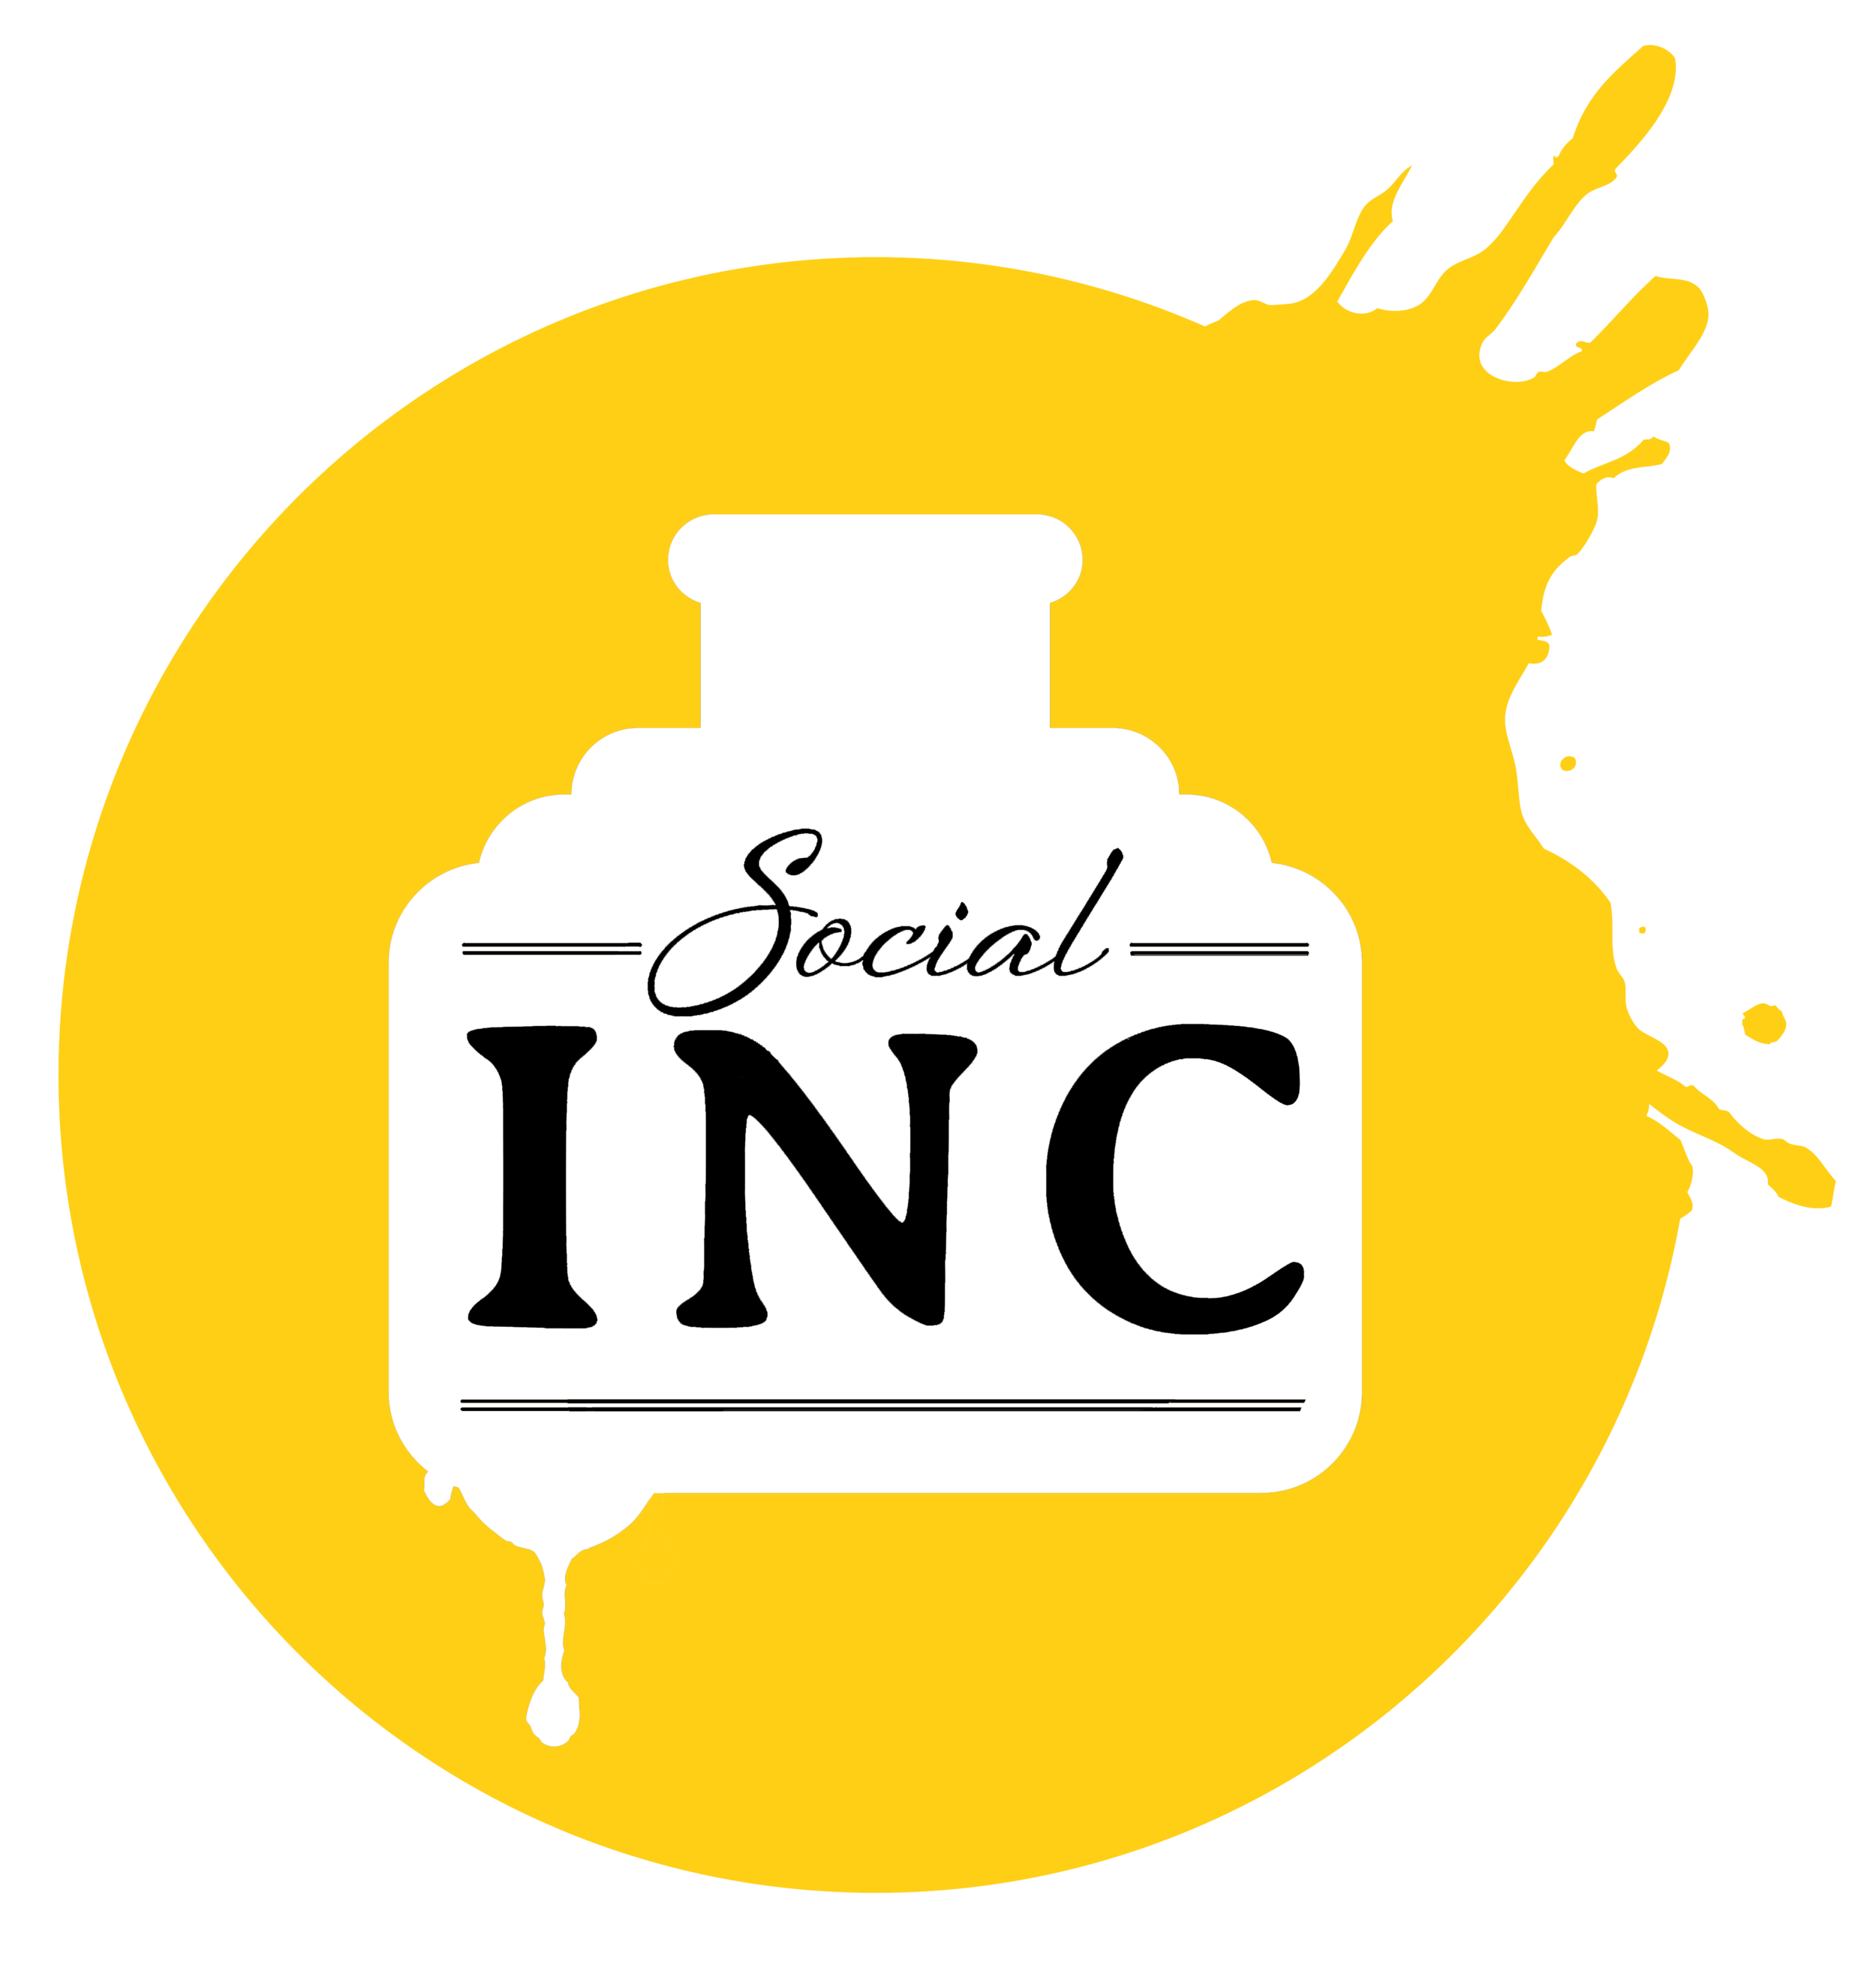 Social Inc